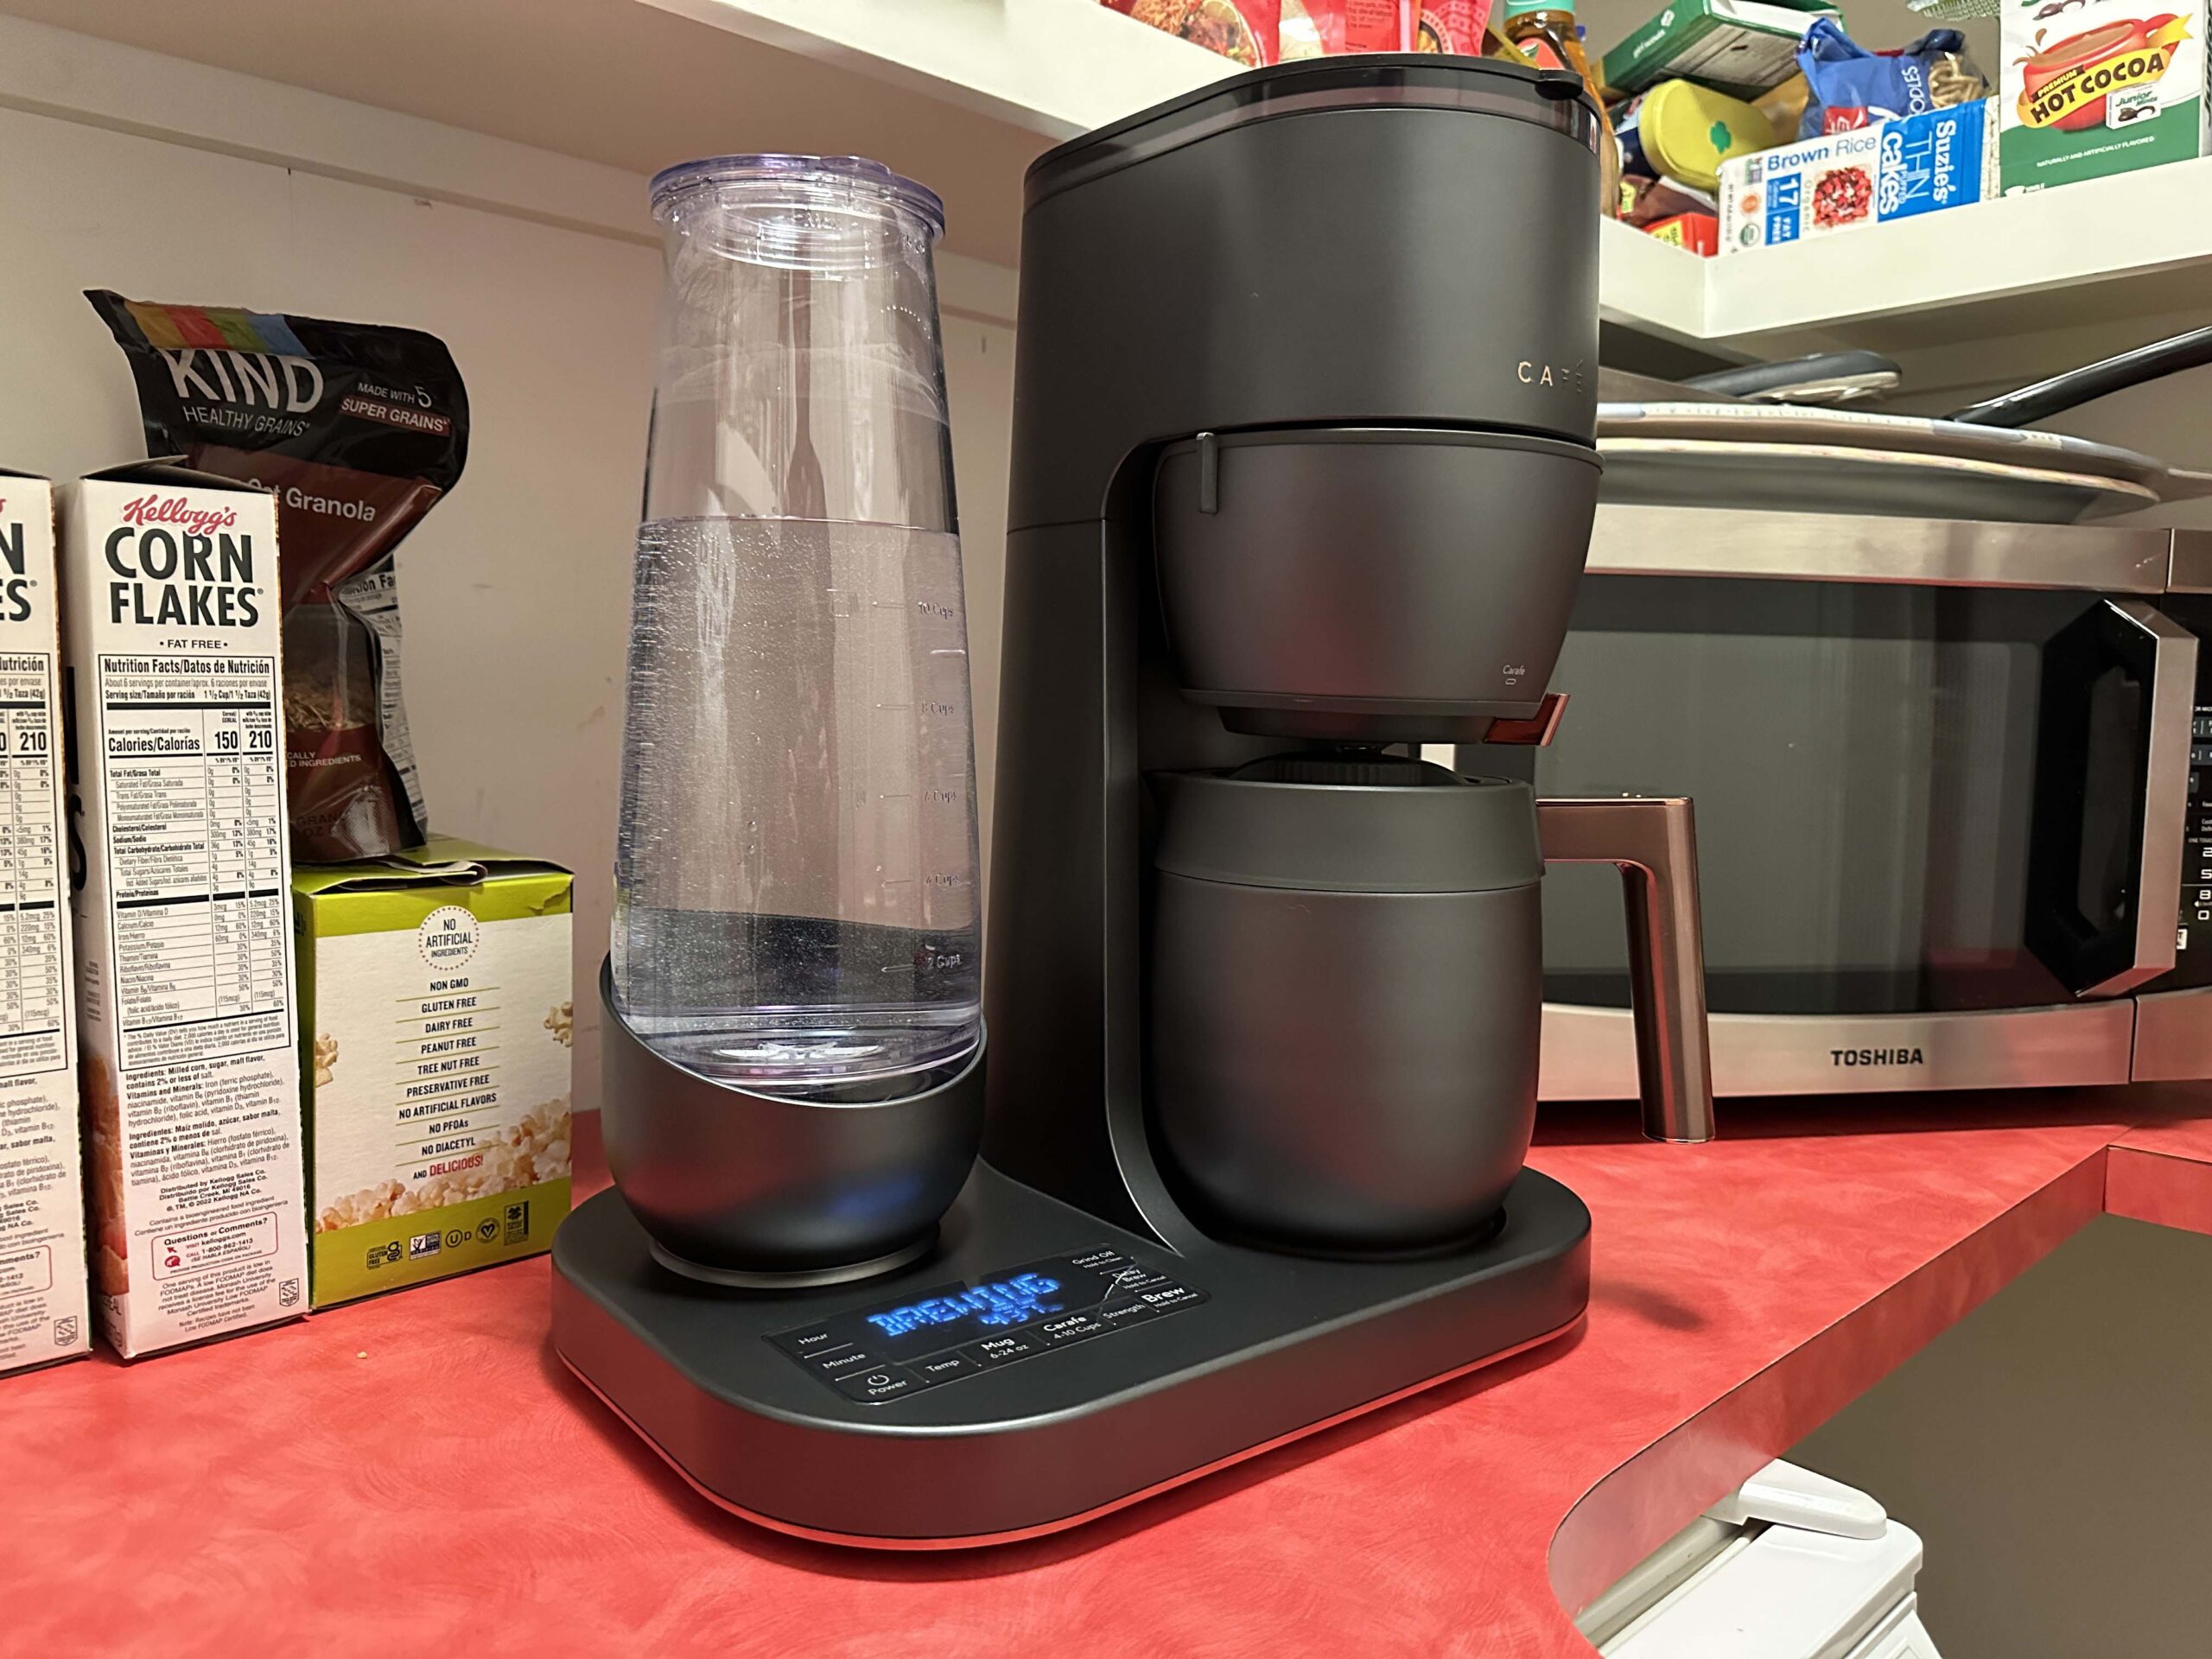 CafeÌ Specialty Grind and Brew Coffee Maker on a red countertop in front of a microwave